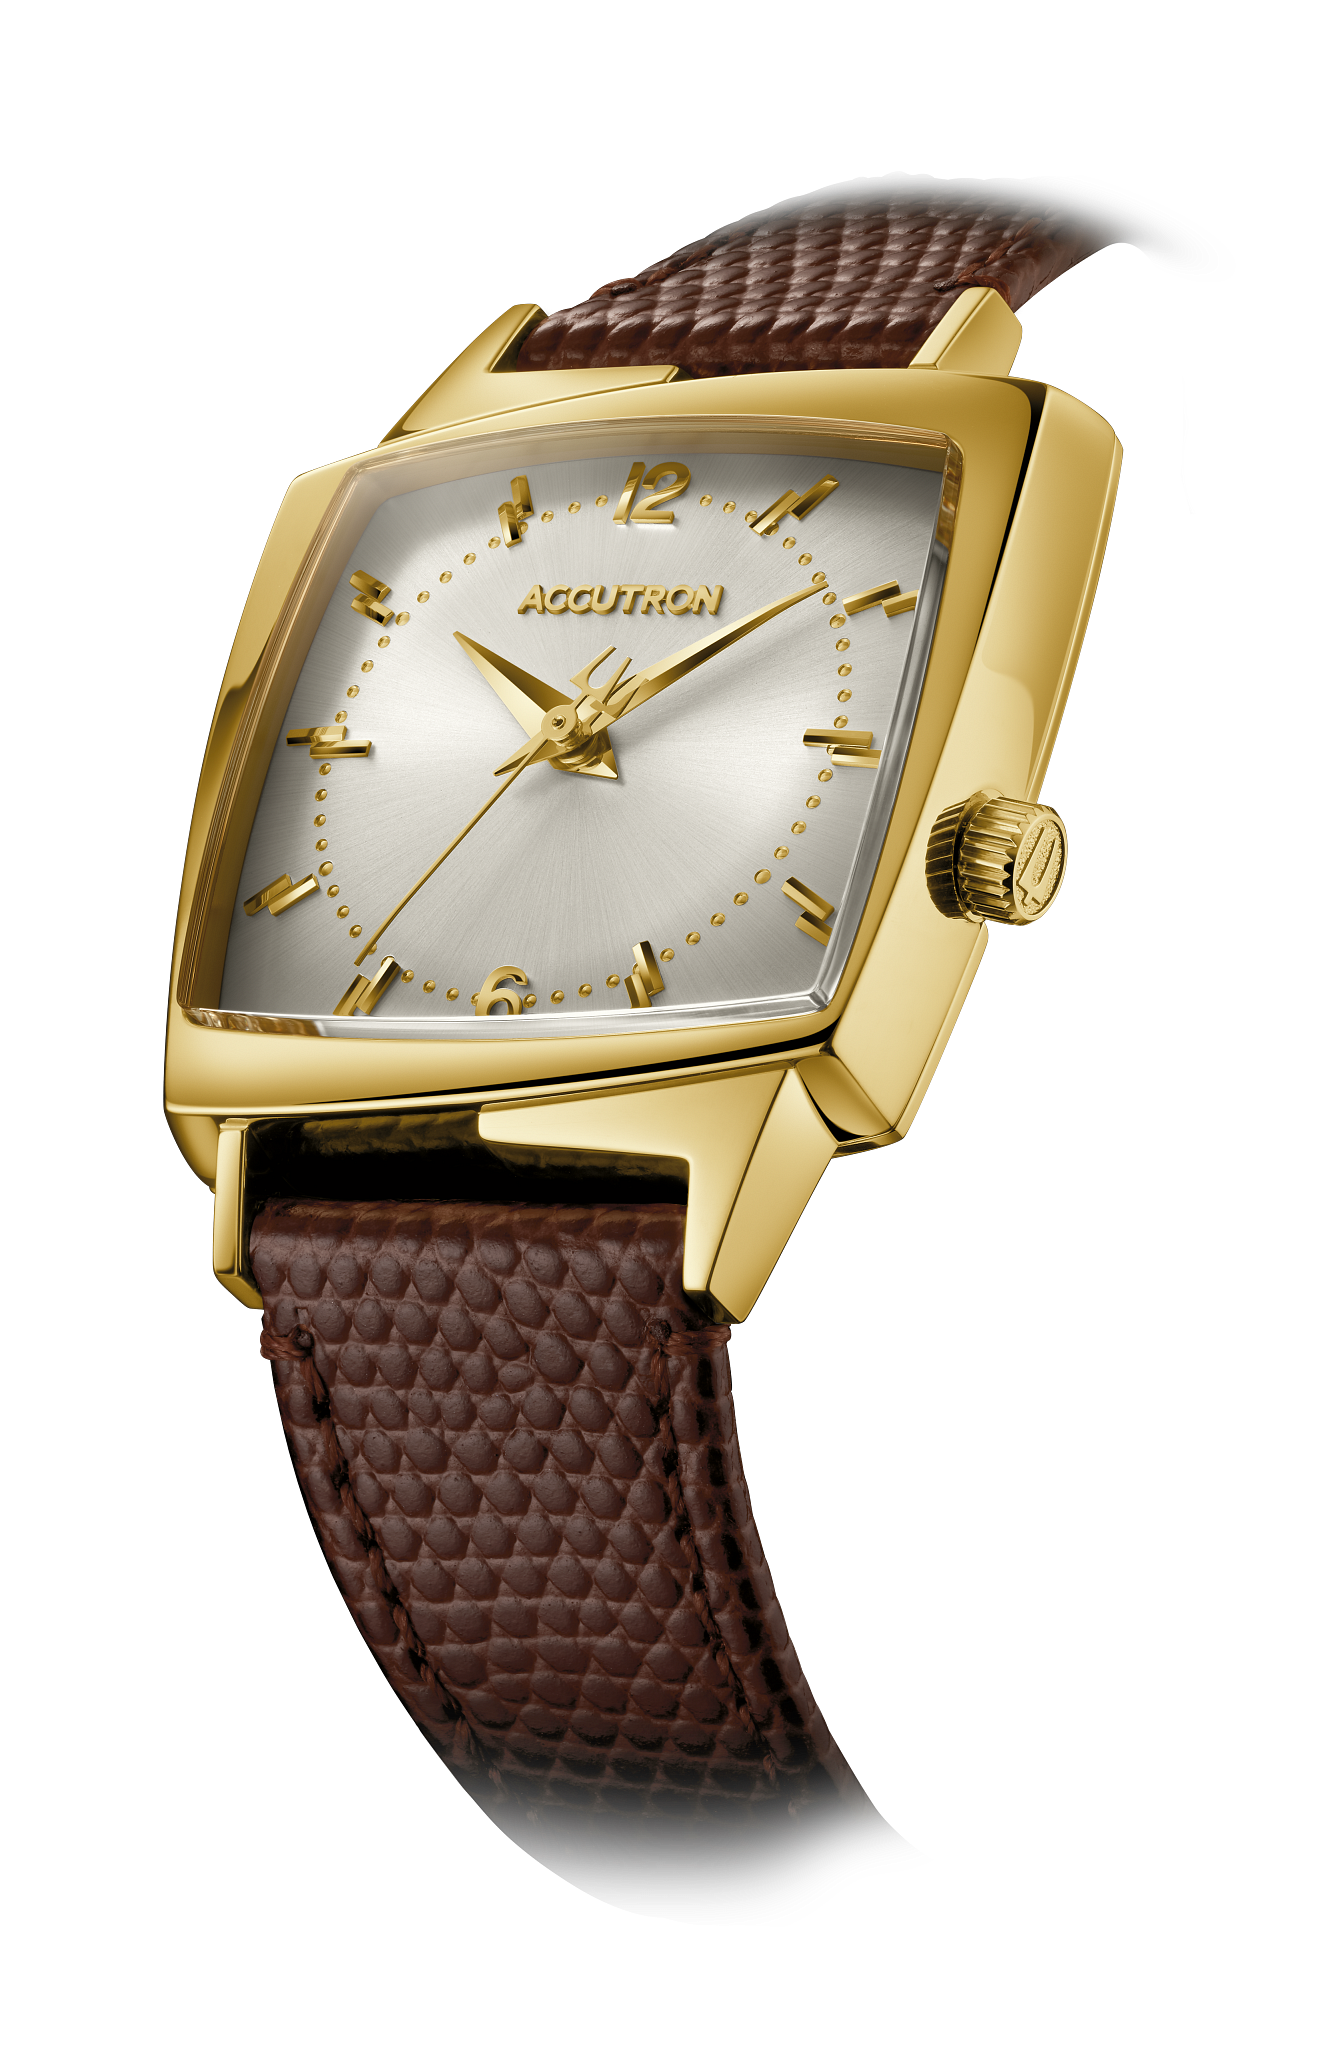 Legacy Date/Day Q Automatic 2sw6c001 - Accutron Legacy wrist watch